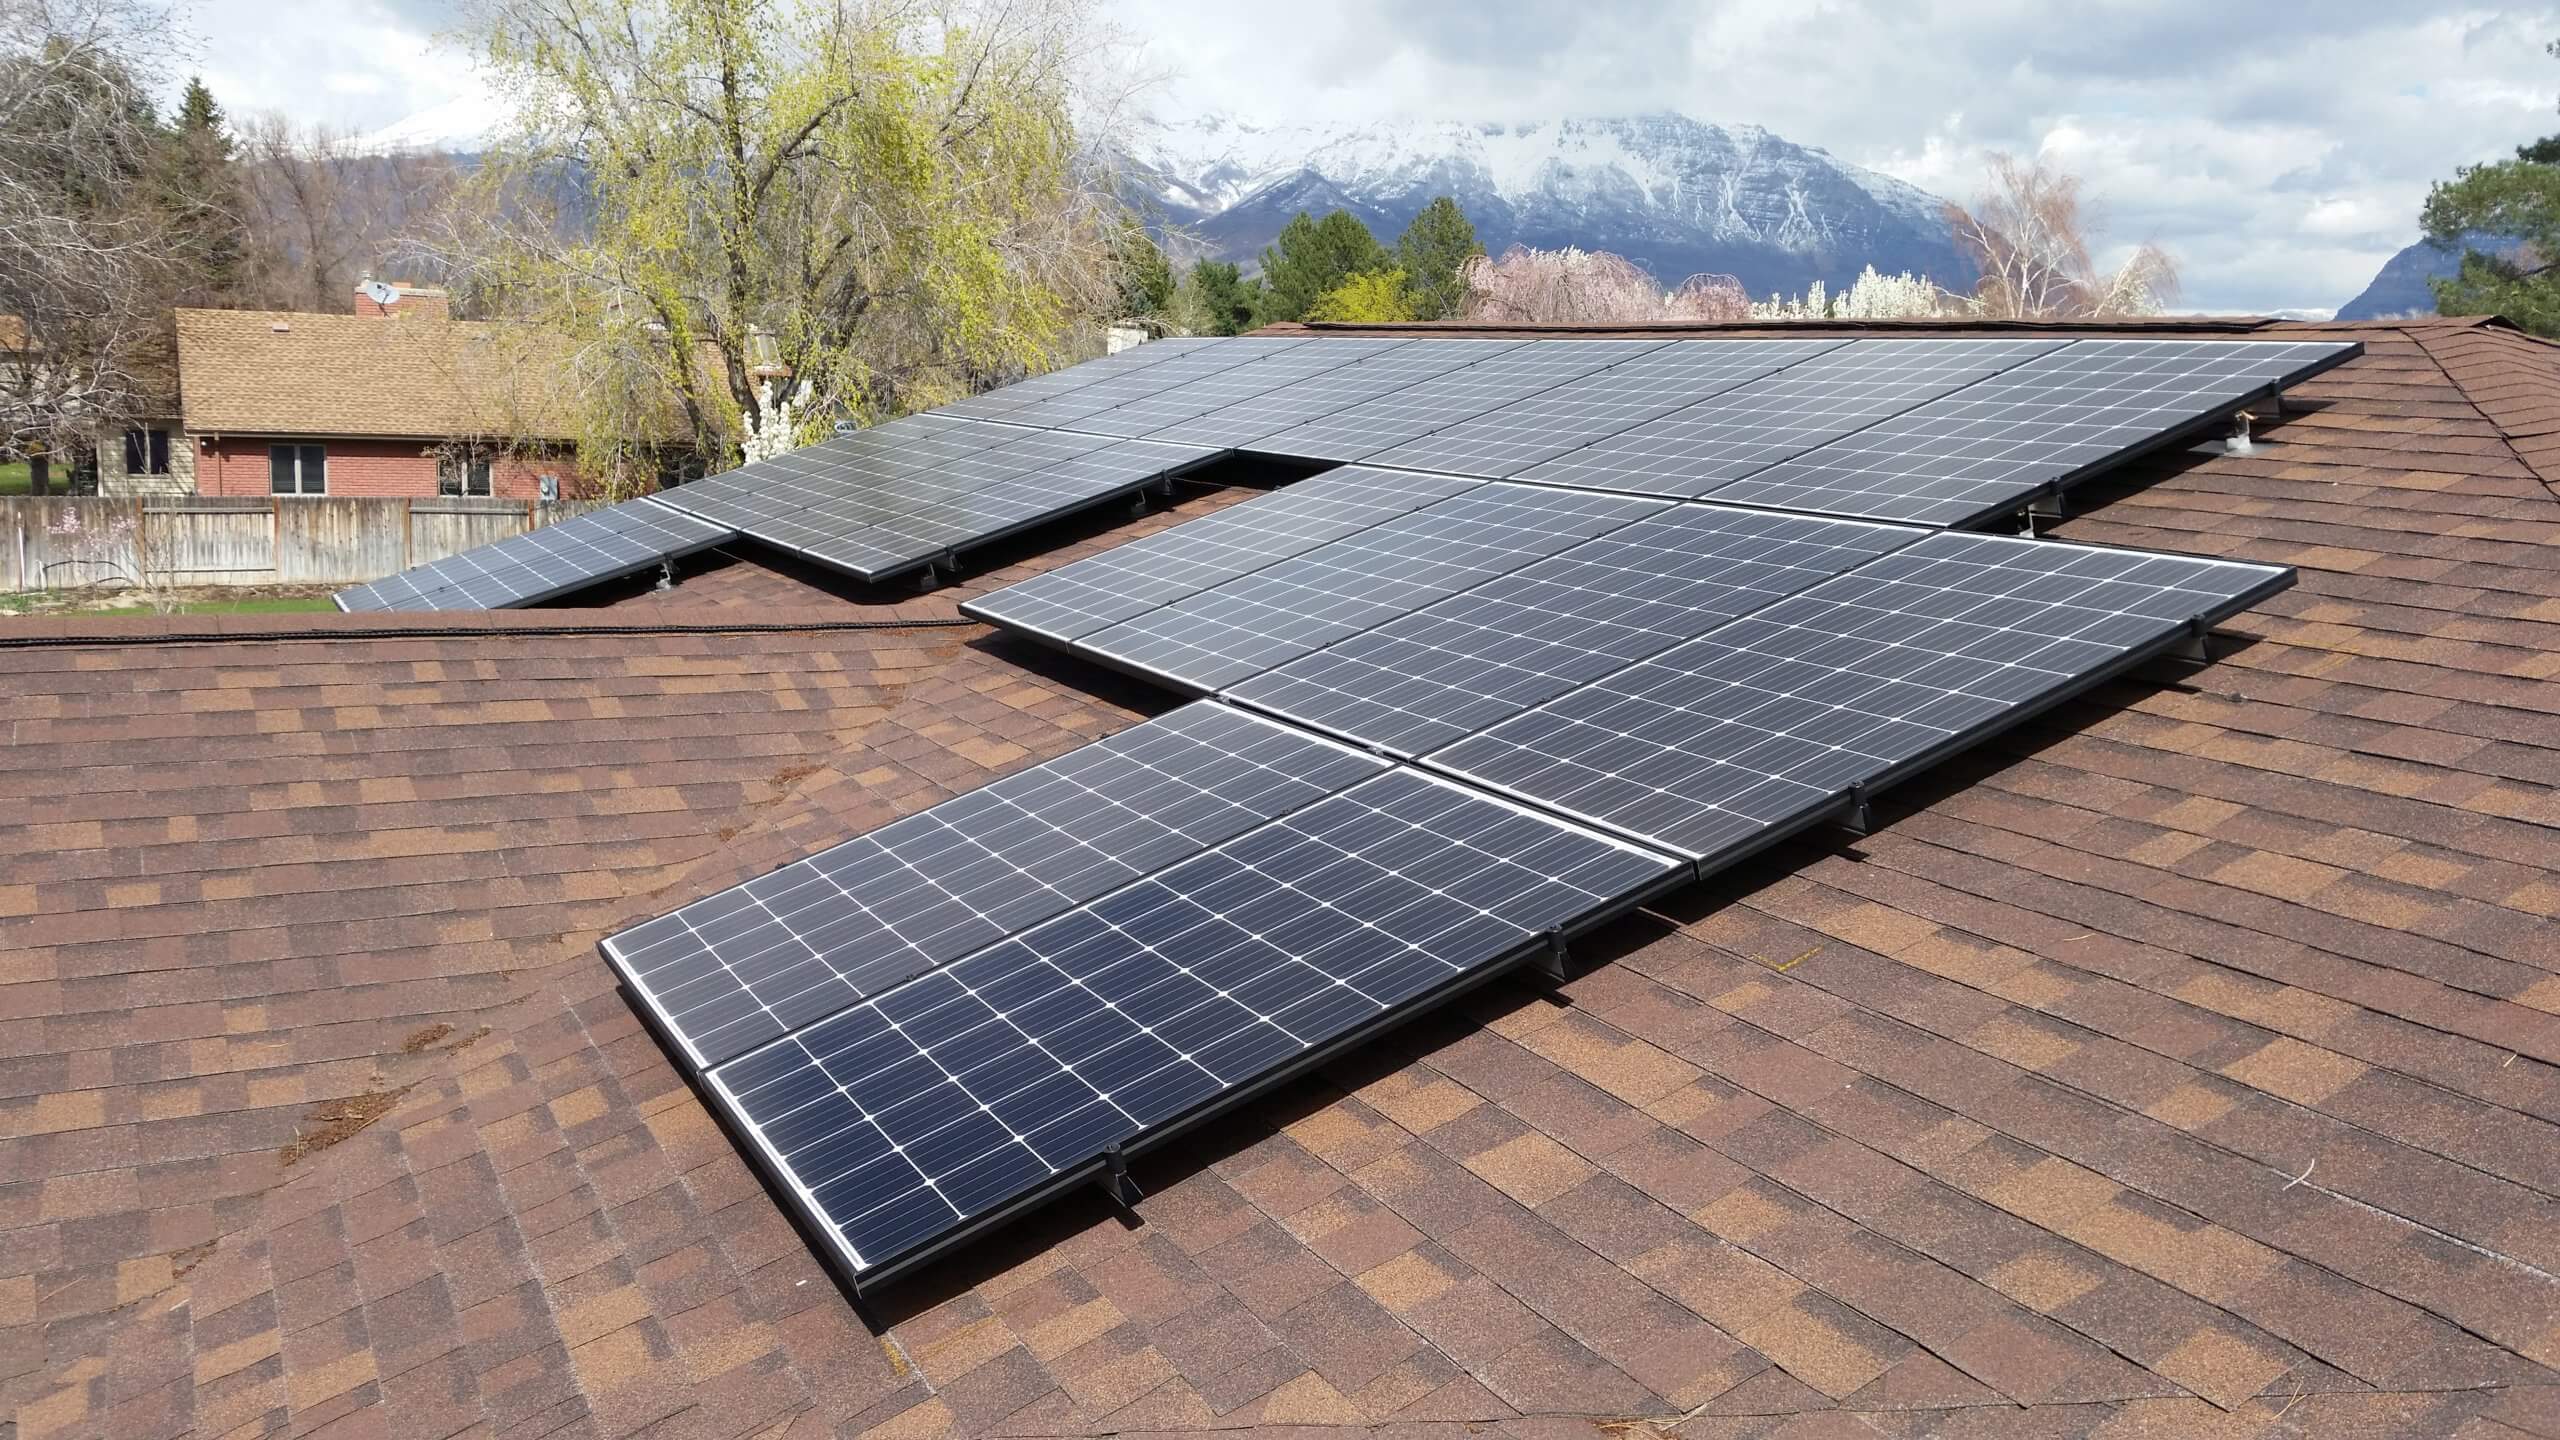 redstone-solar-orem-utah-solar-power-installation-canadian-solar-290W-panels-sma-7.7us-inverter